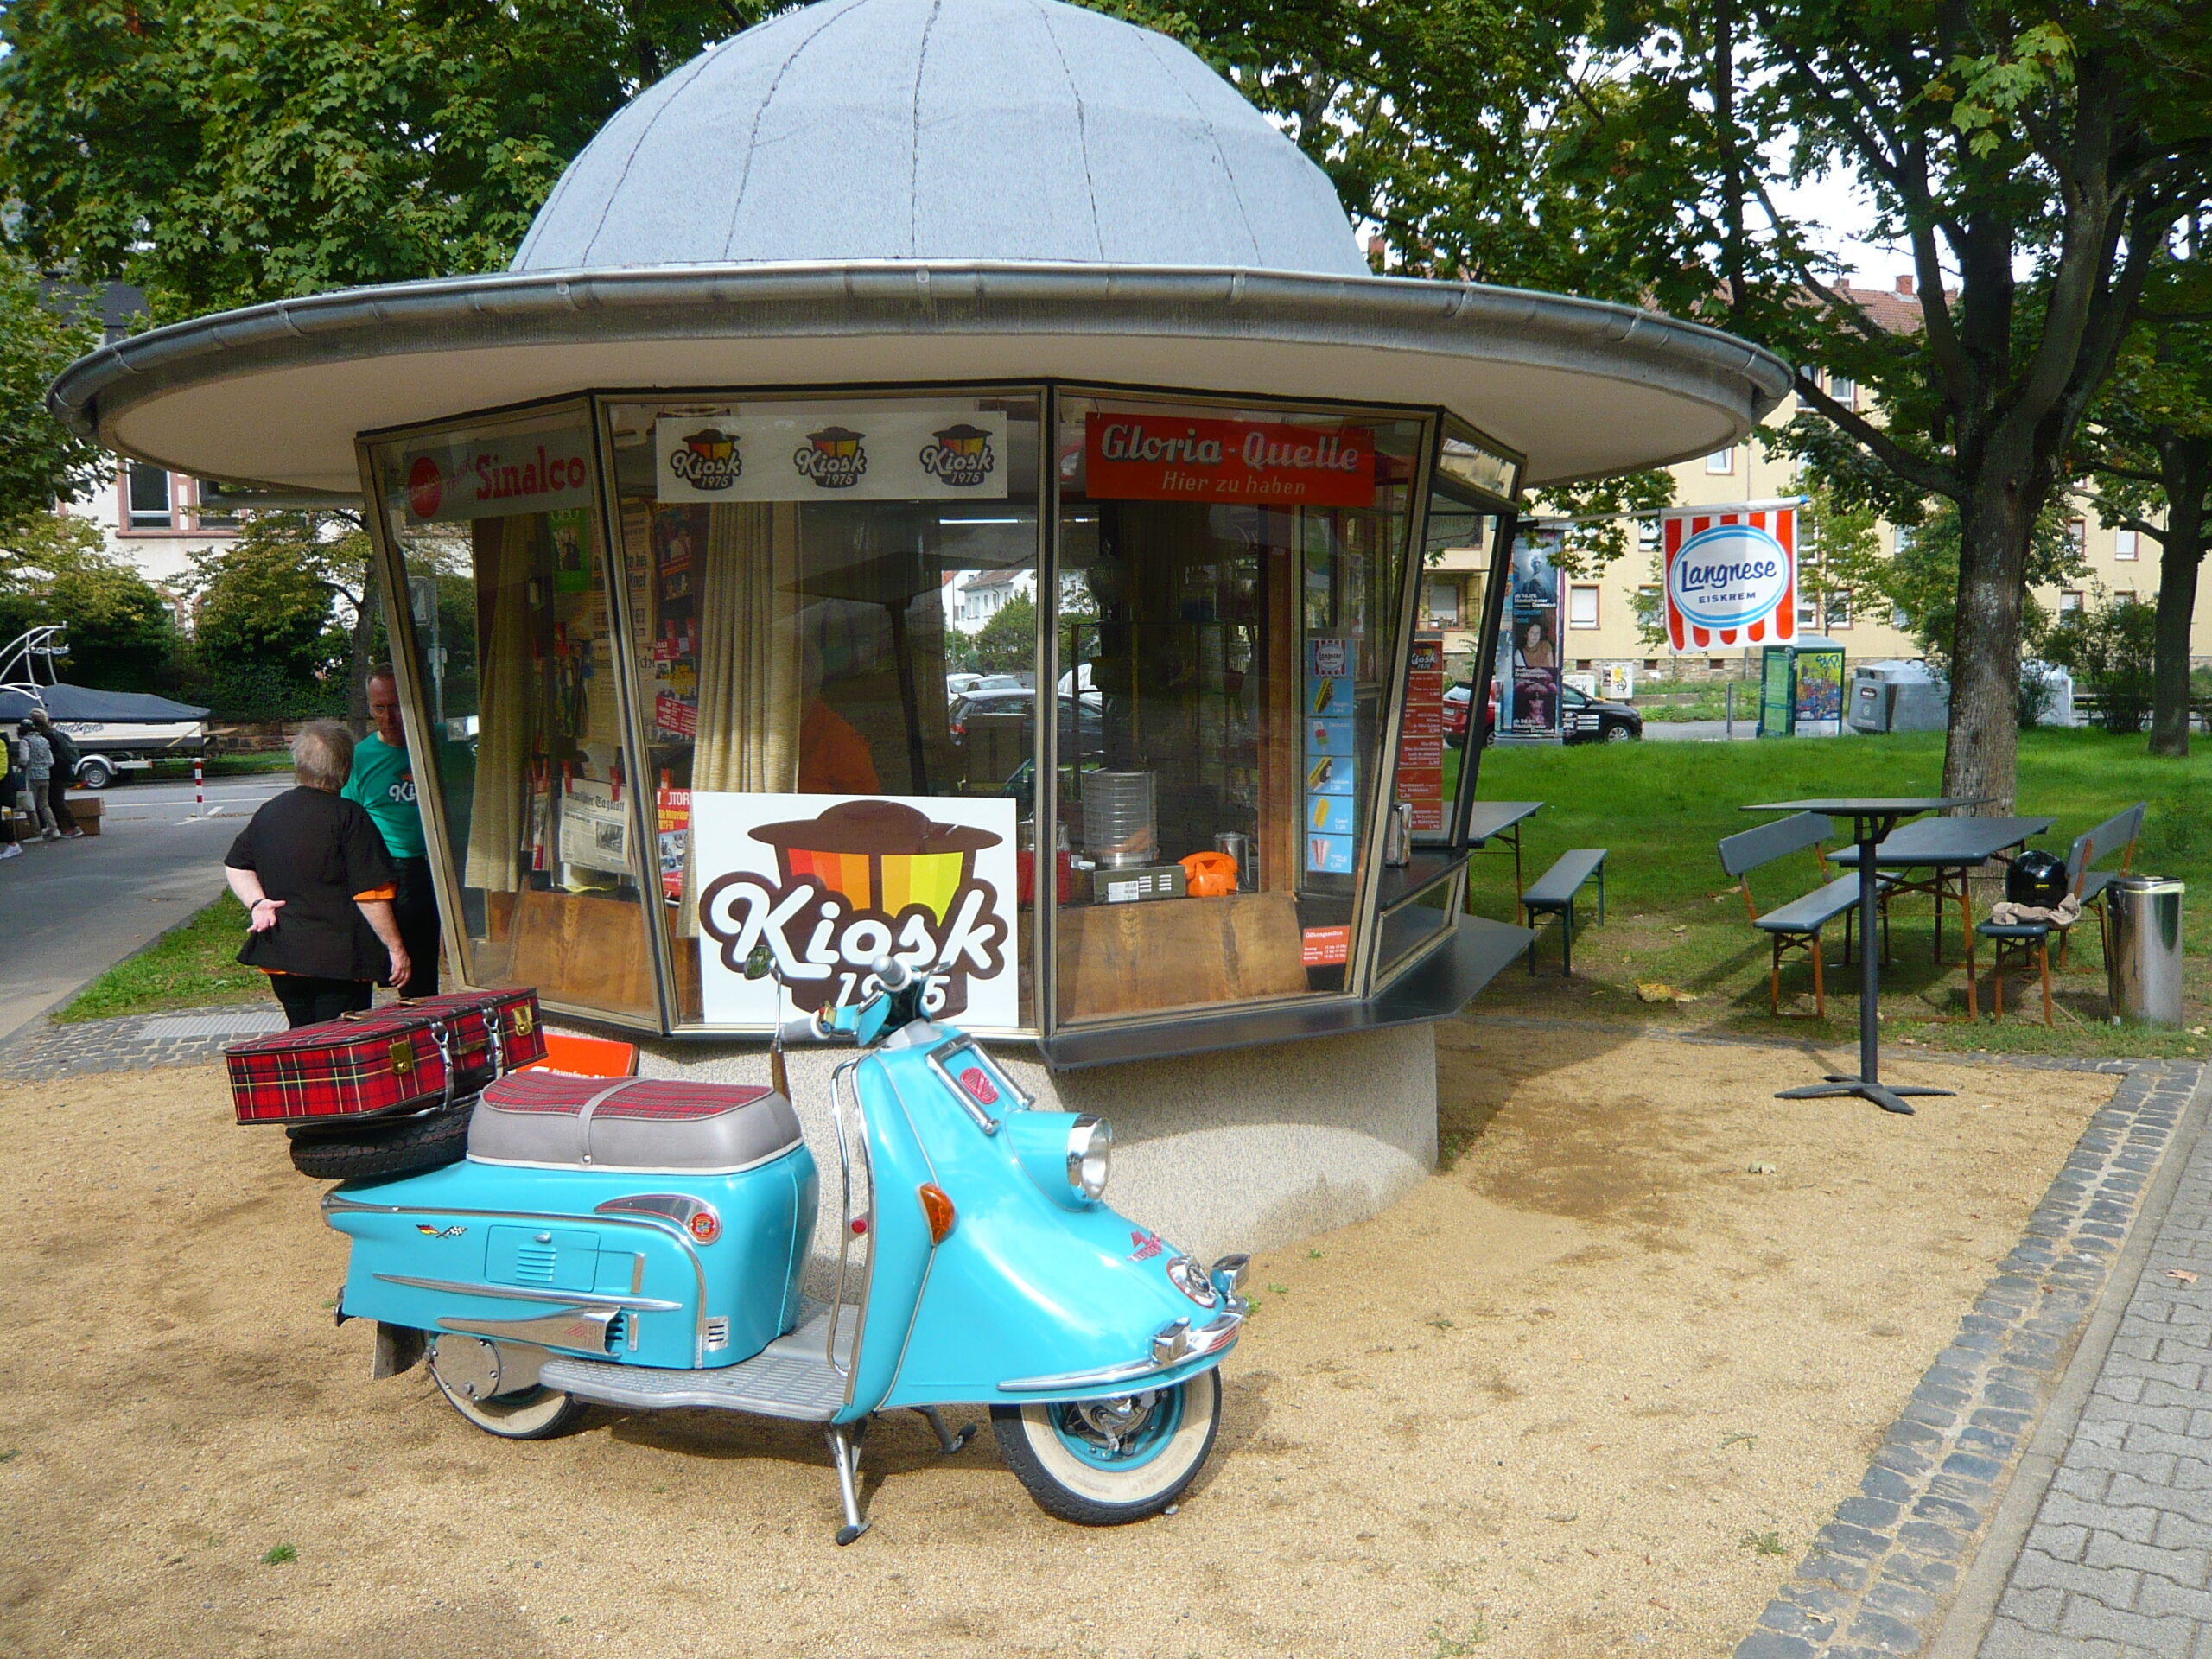 You are currently viewing Kiosk 1975: Heinkel-Roller bringt die 60er Jahre ans Kiosk…